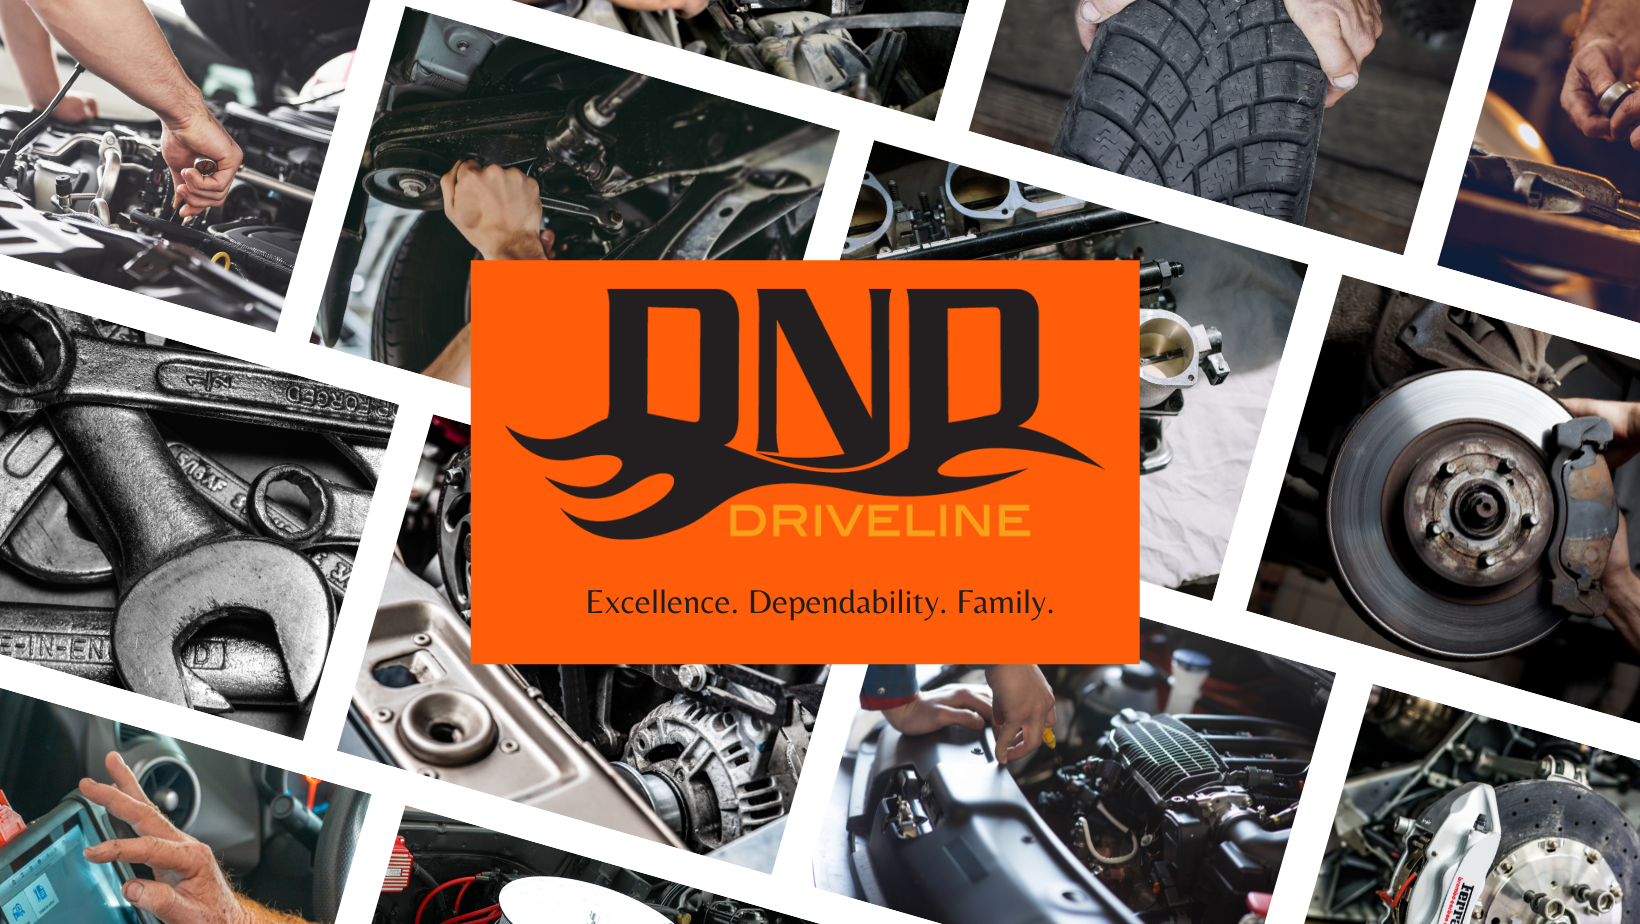 DND Driveline Ltd